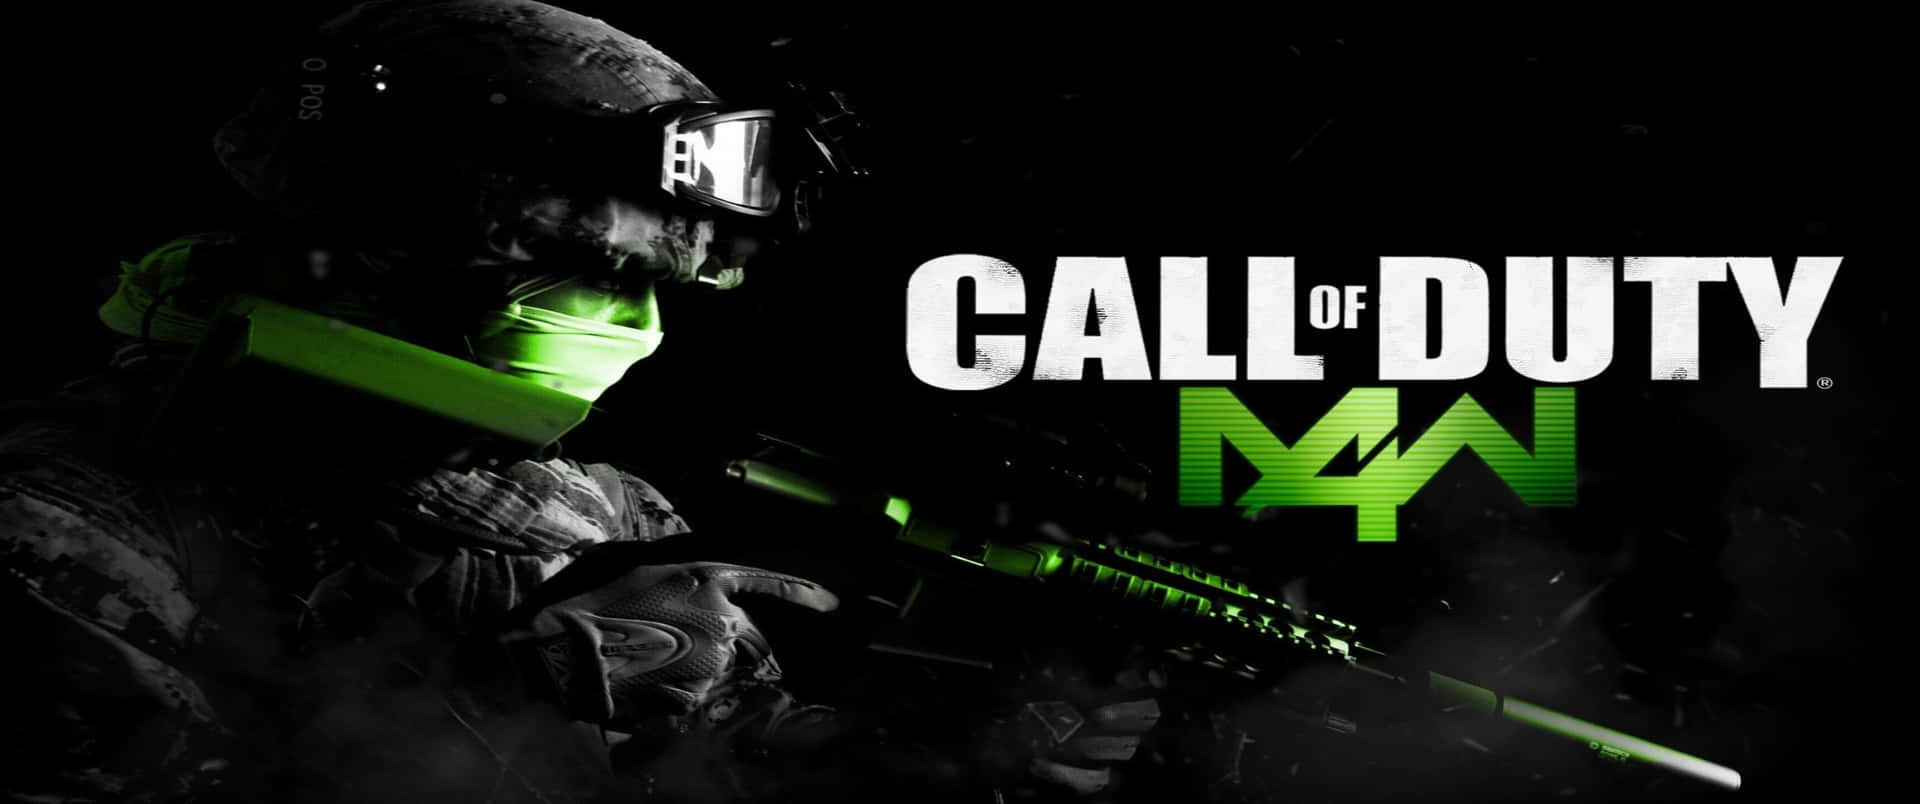 Neongrön Titel 3440x1440p Call Of Duty Modern Warfare Bakgrund